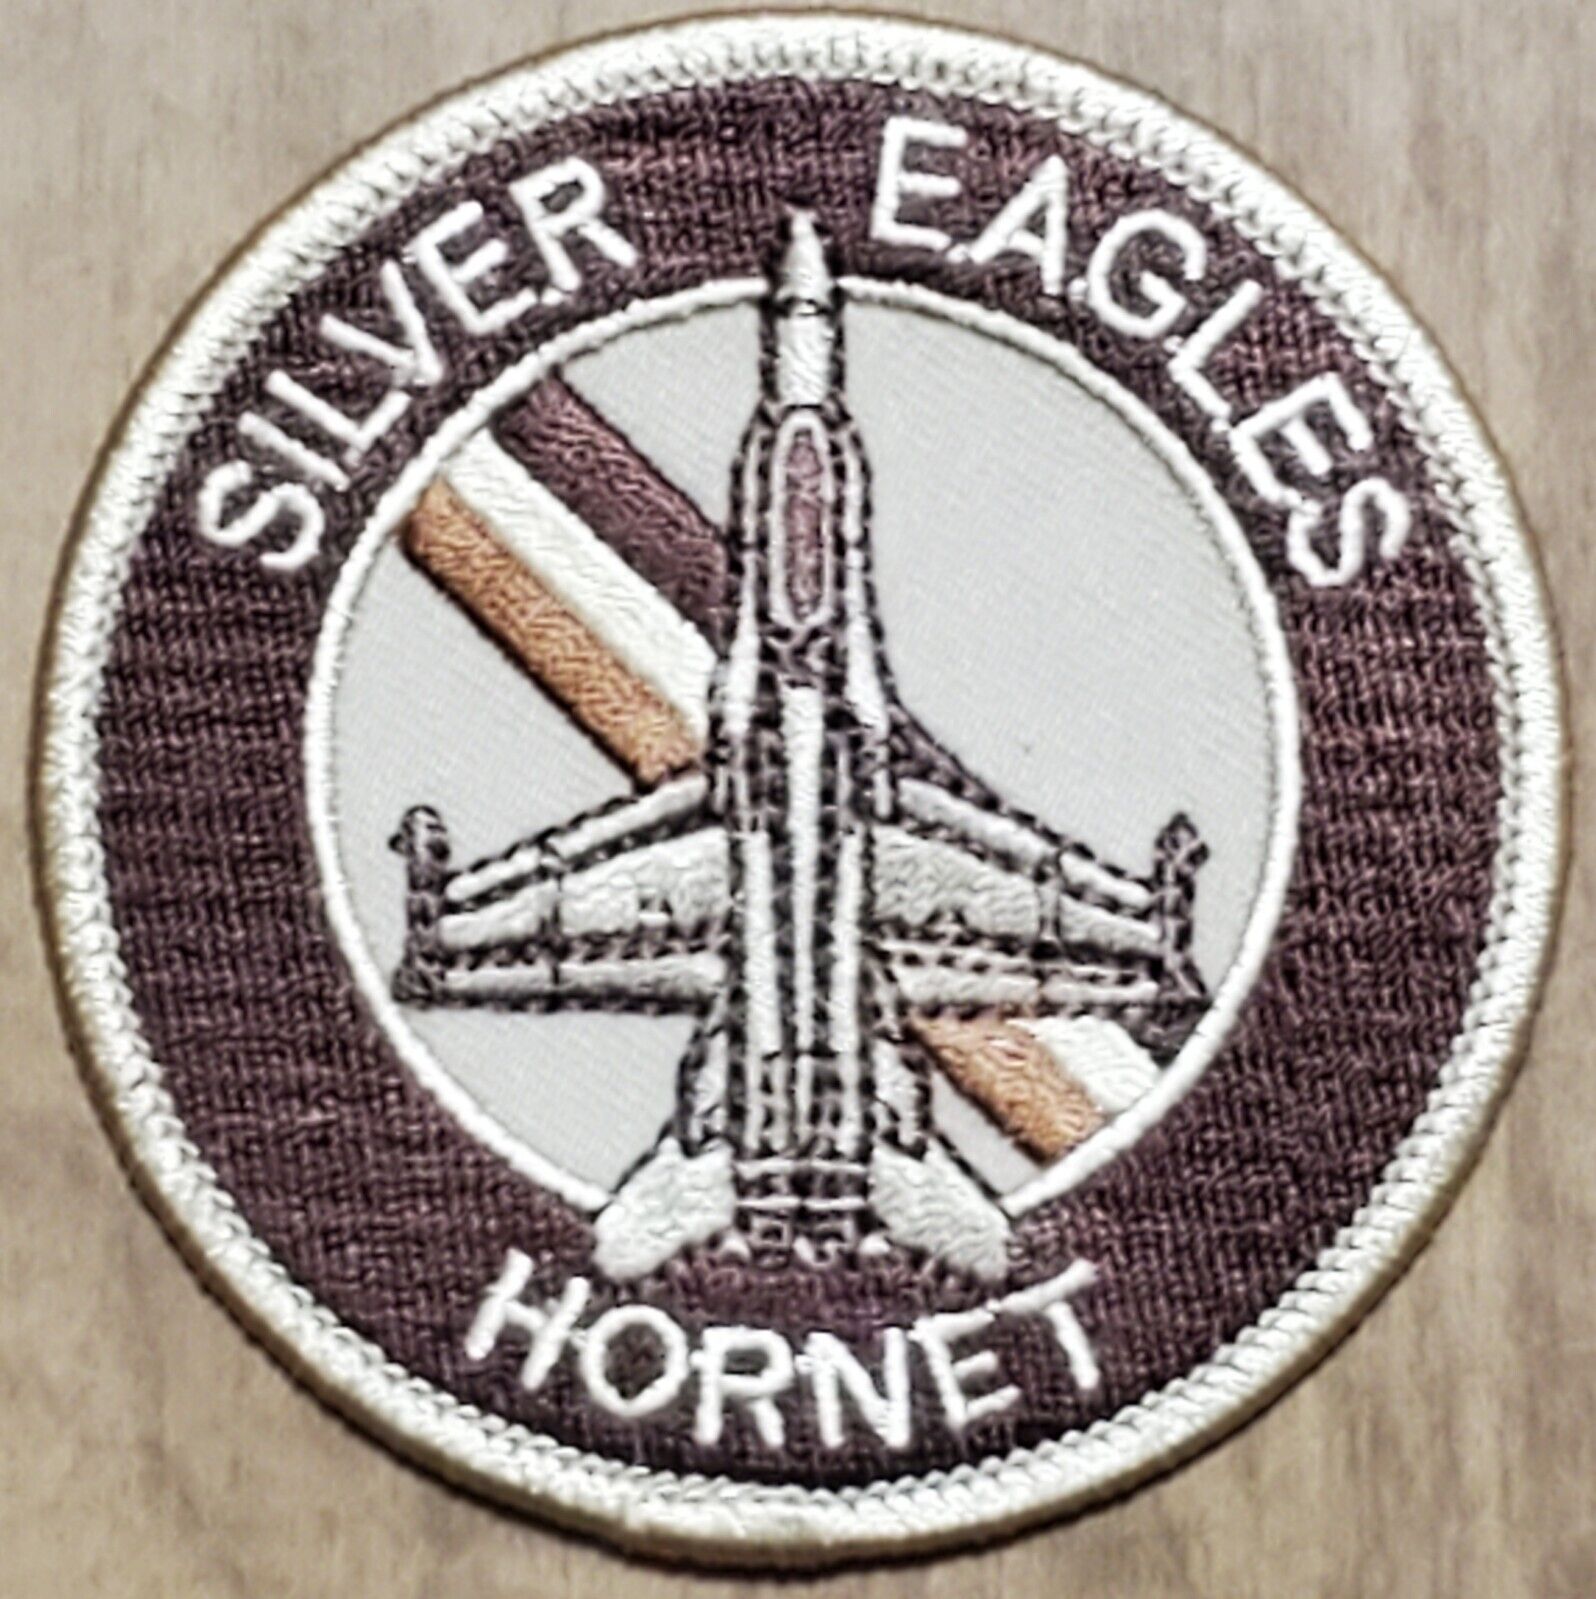 USMC MARINES VMFA-115 SILVER EAGLE F-18 HORNET Strike Fighter Sqdn Patch DESERT 